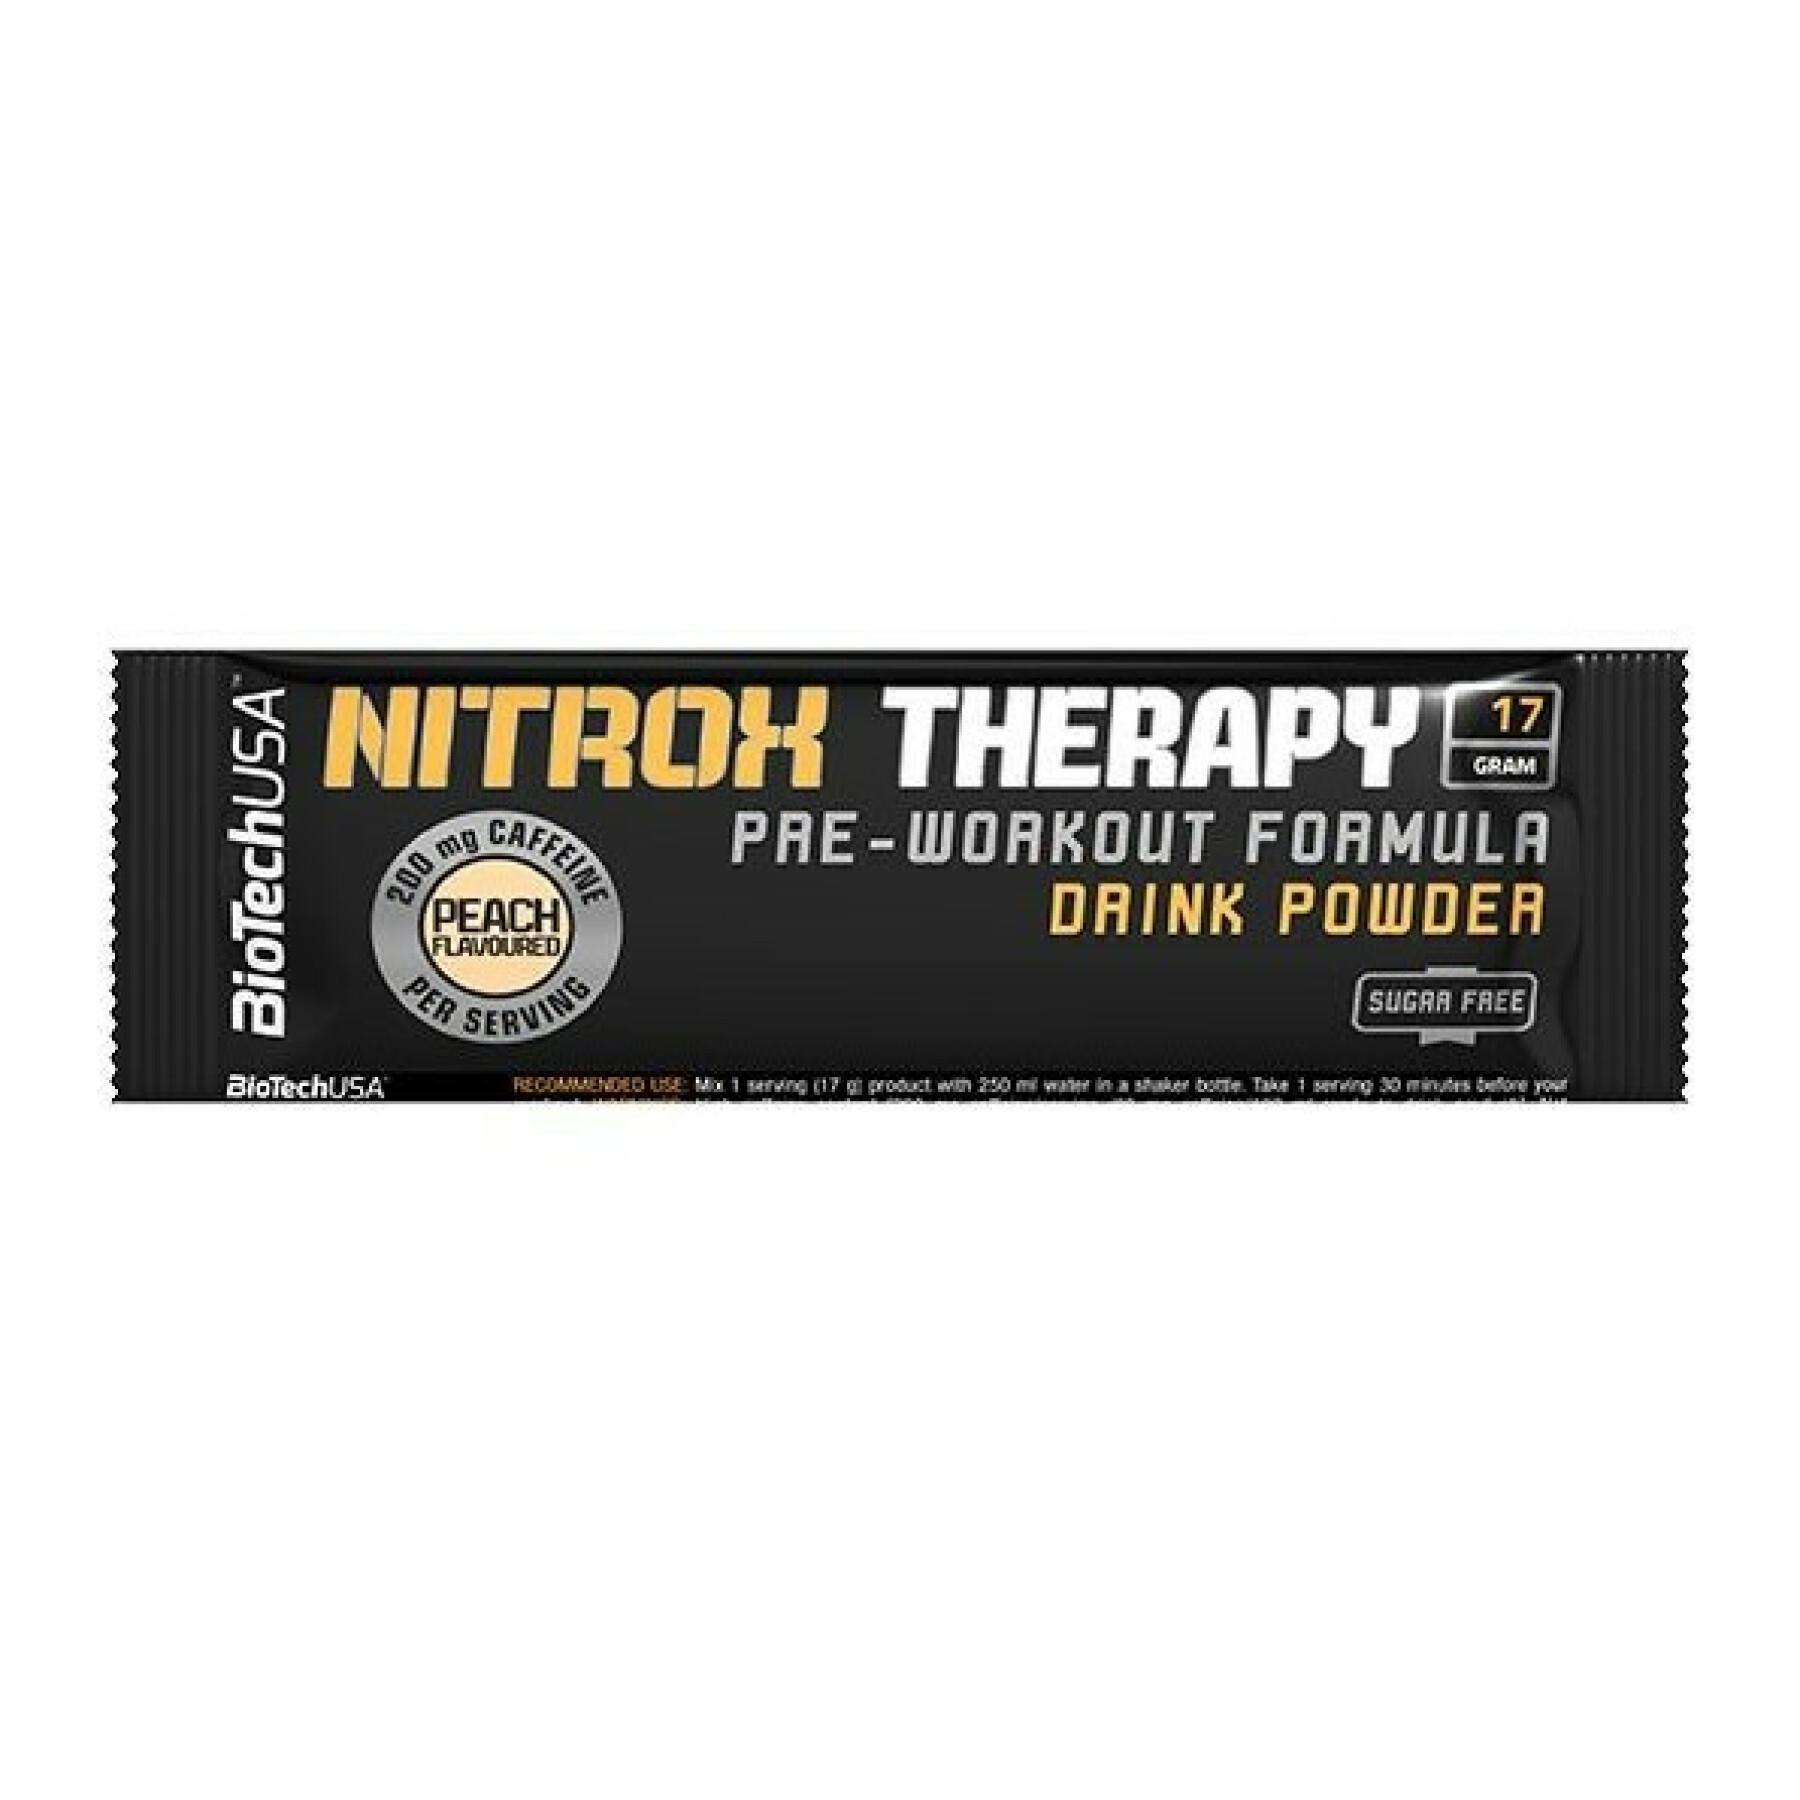 Paquete de 50 paquetes de refuerzo Biotech USA nitrox therapy - Pamplemousse - 17g